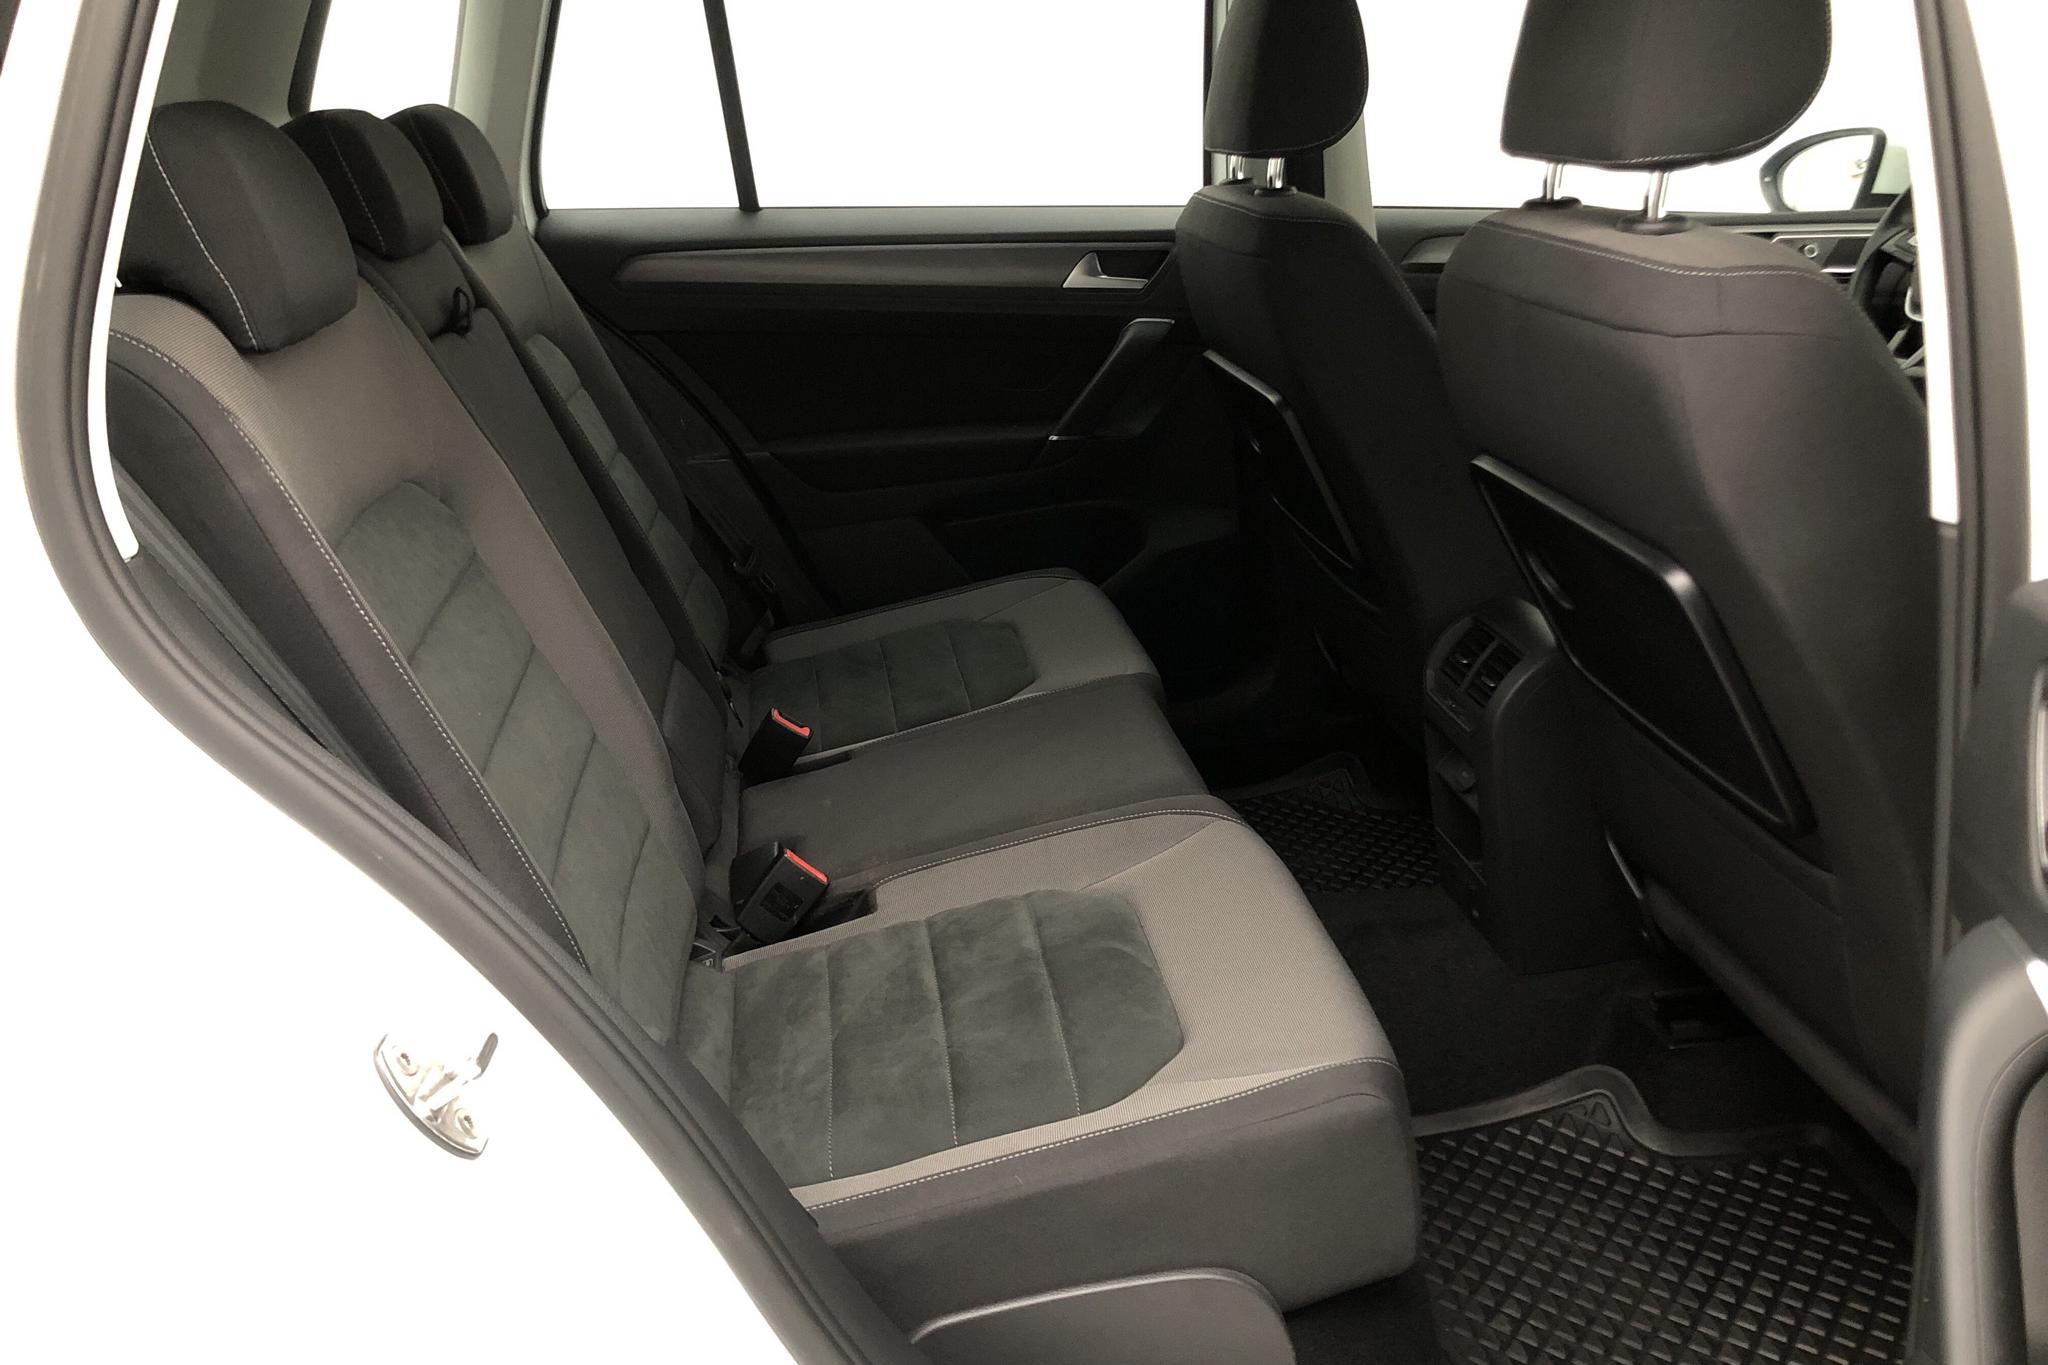 VW Golf VII 1.6 TDI Sportsvan (115hk) - 3 220 mil - Automat - vit - 2019